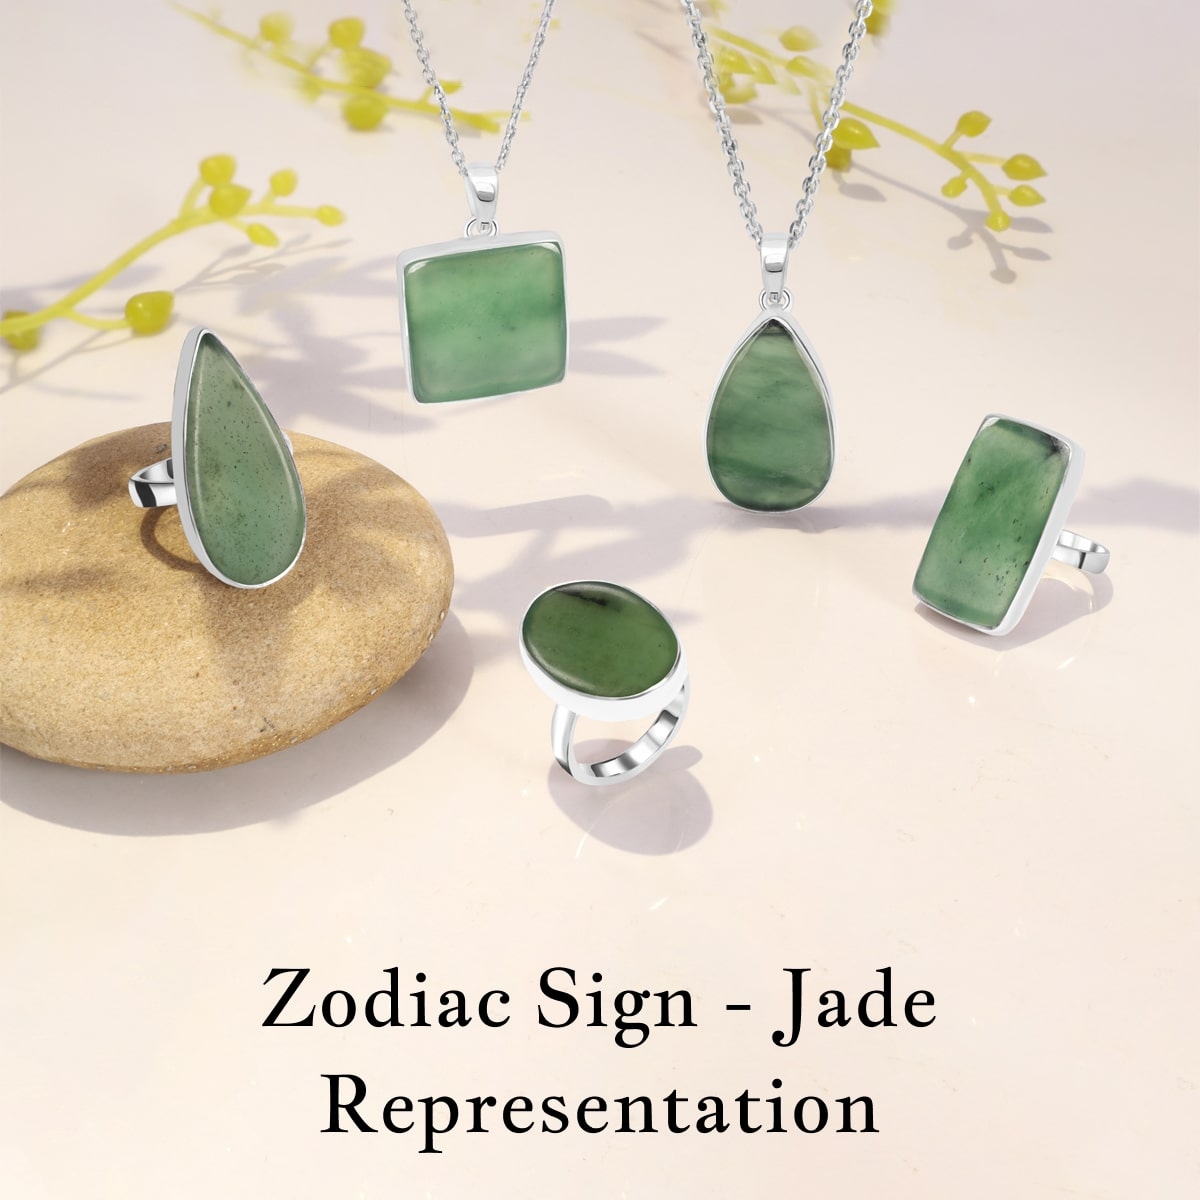 Zodiac sign Jade